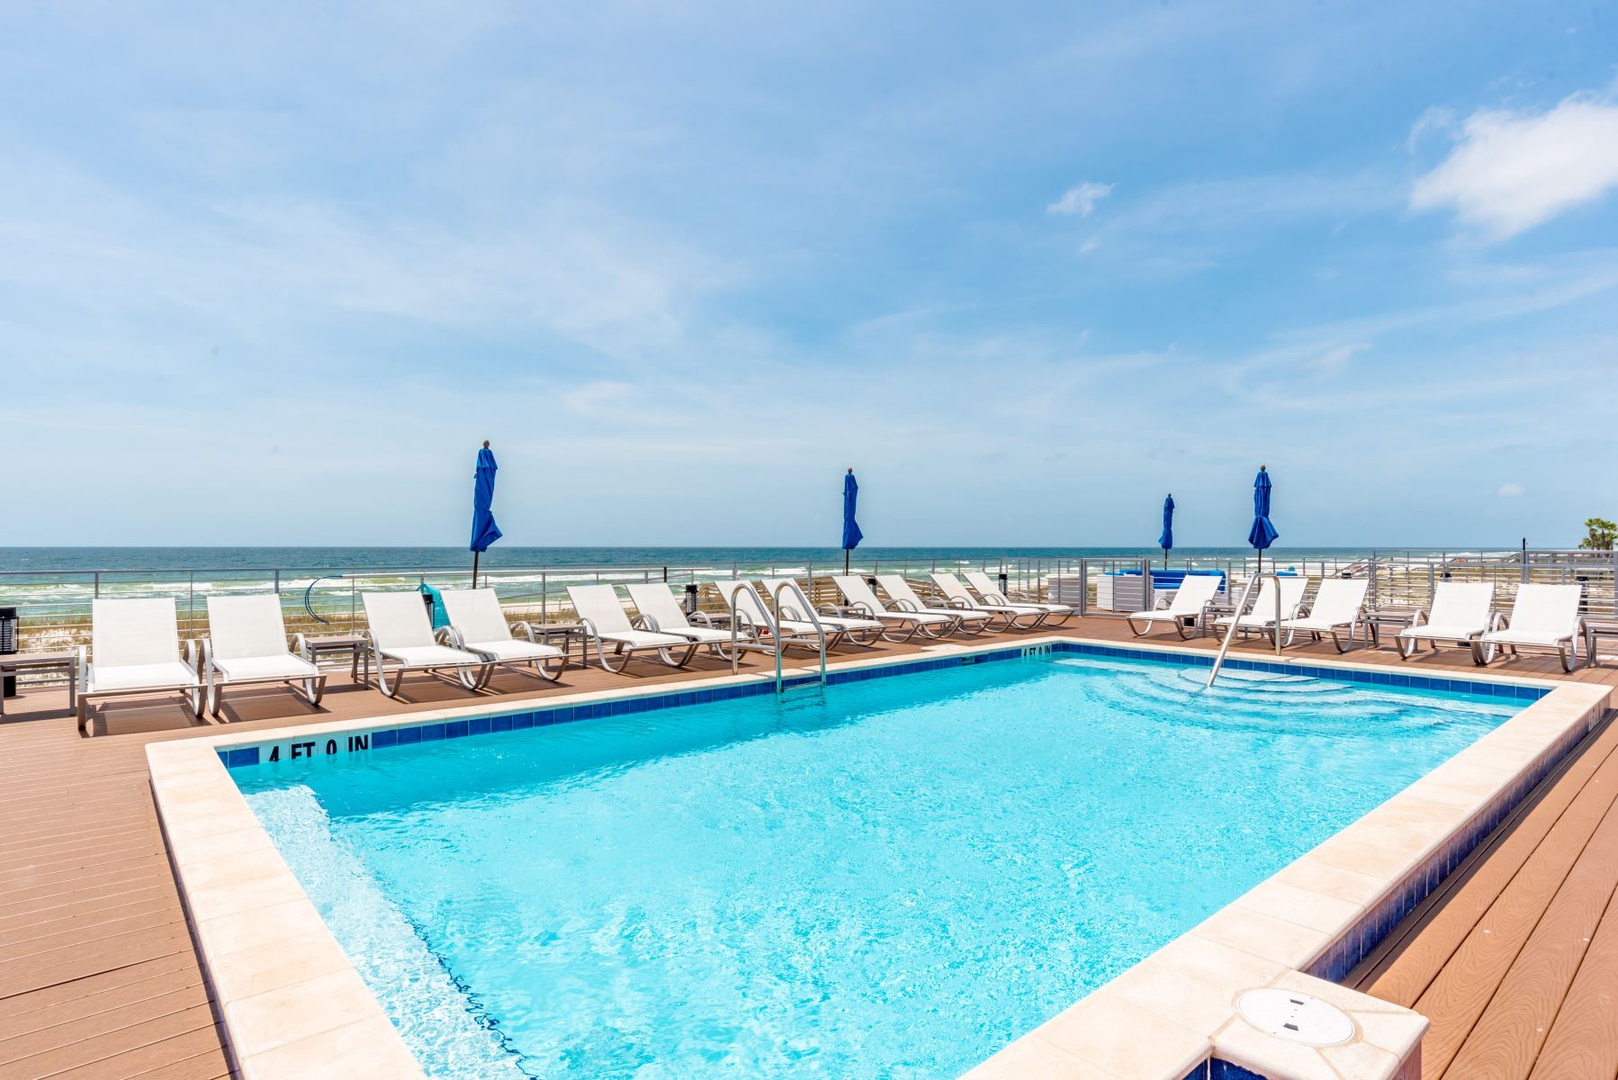 Lost Key Resort Community Beach Club Pool And Chairs